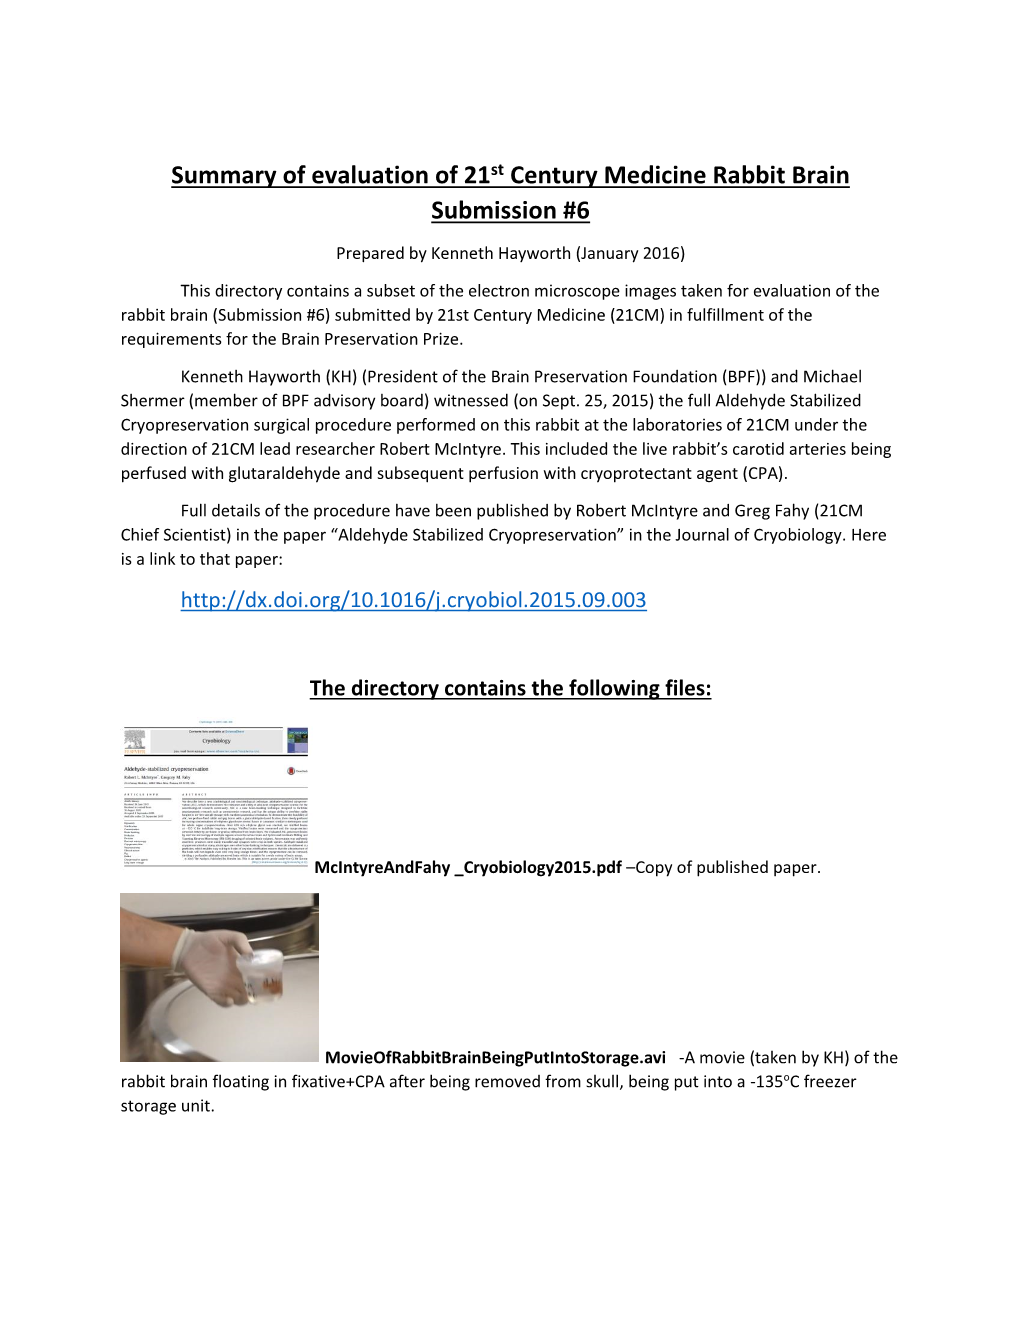 Summary of Evaluation of 21St Century Medicine Rabbit Brain Submission #6